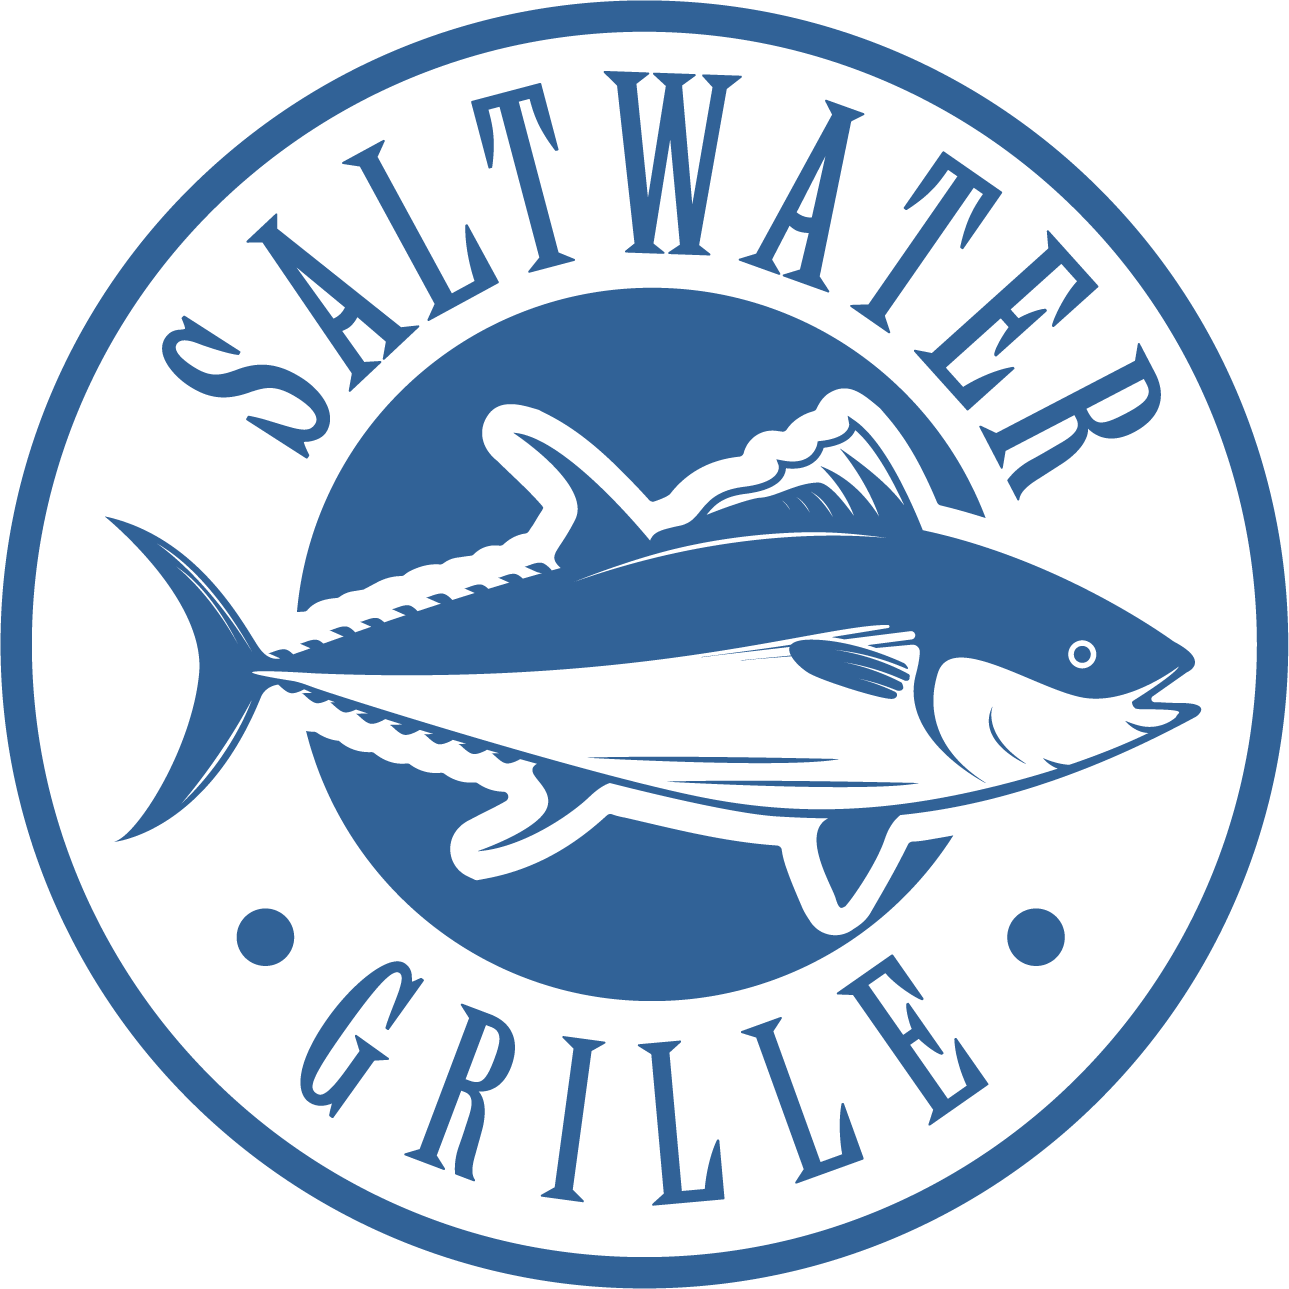 Saltwater Grille